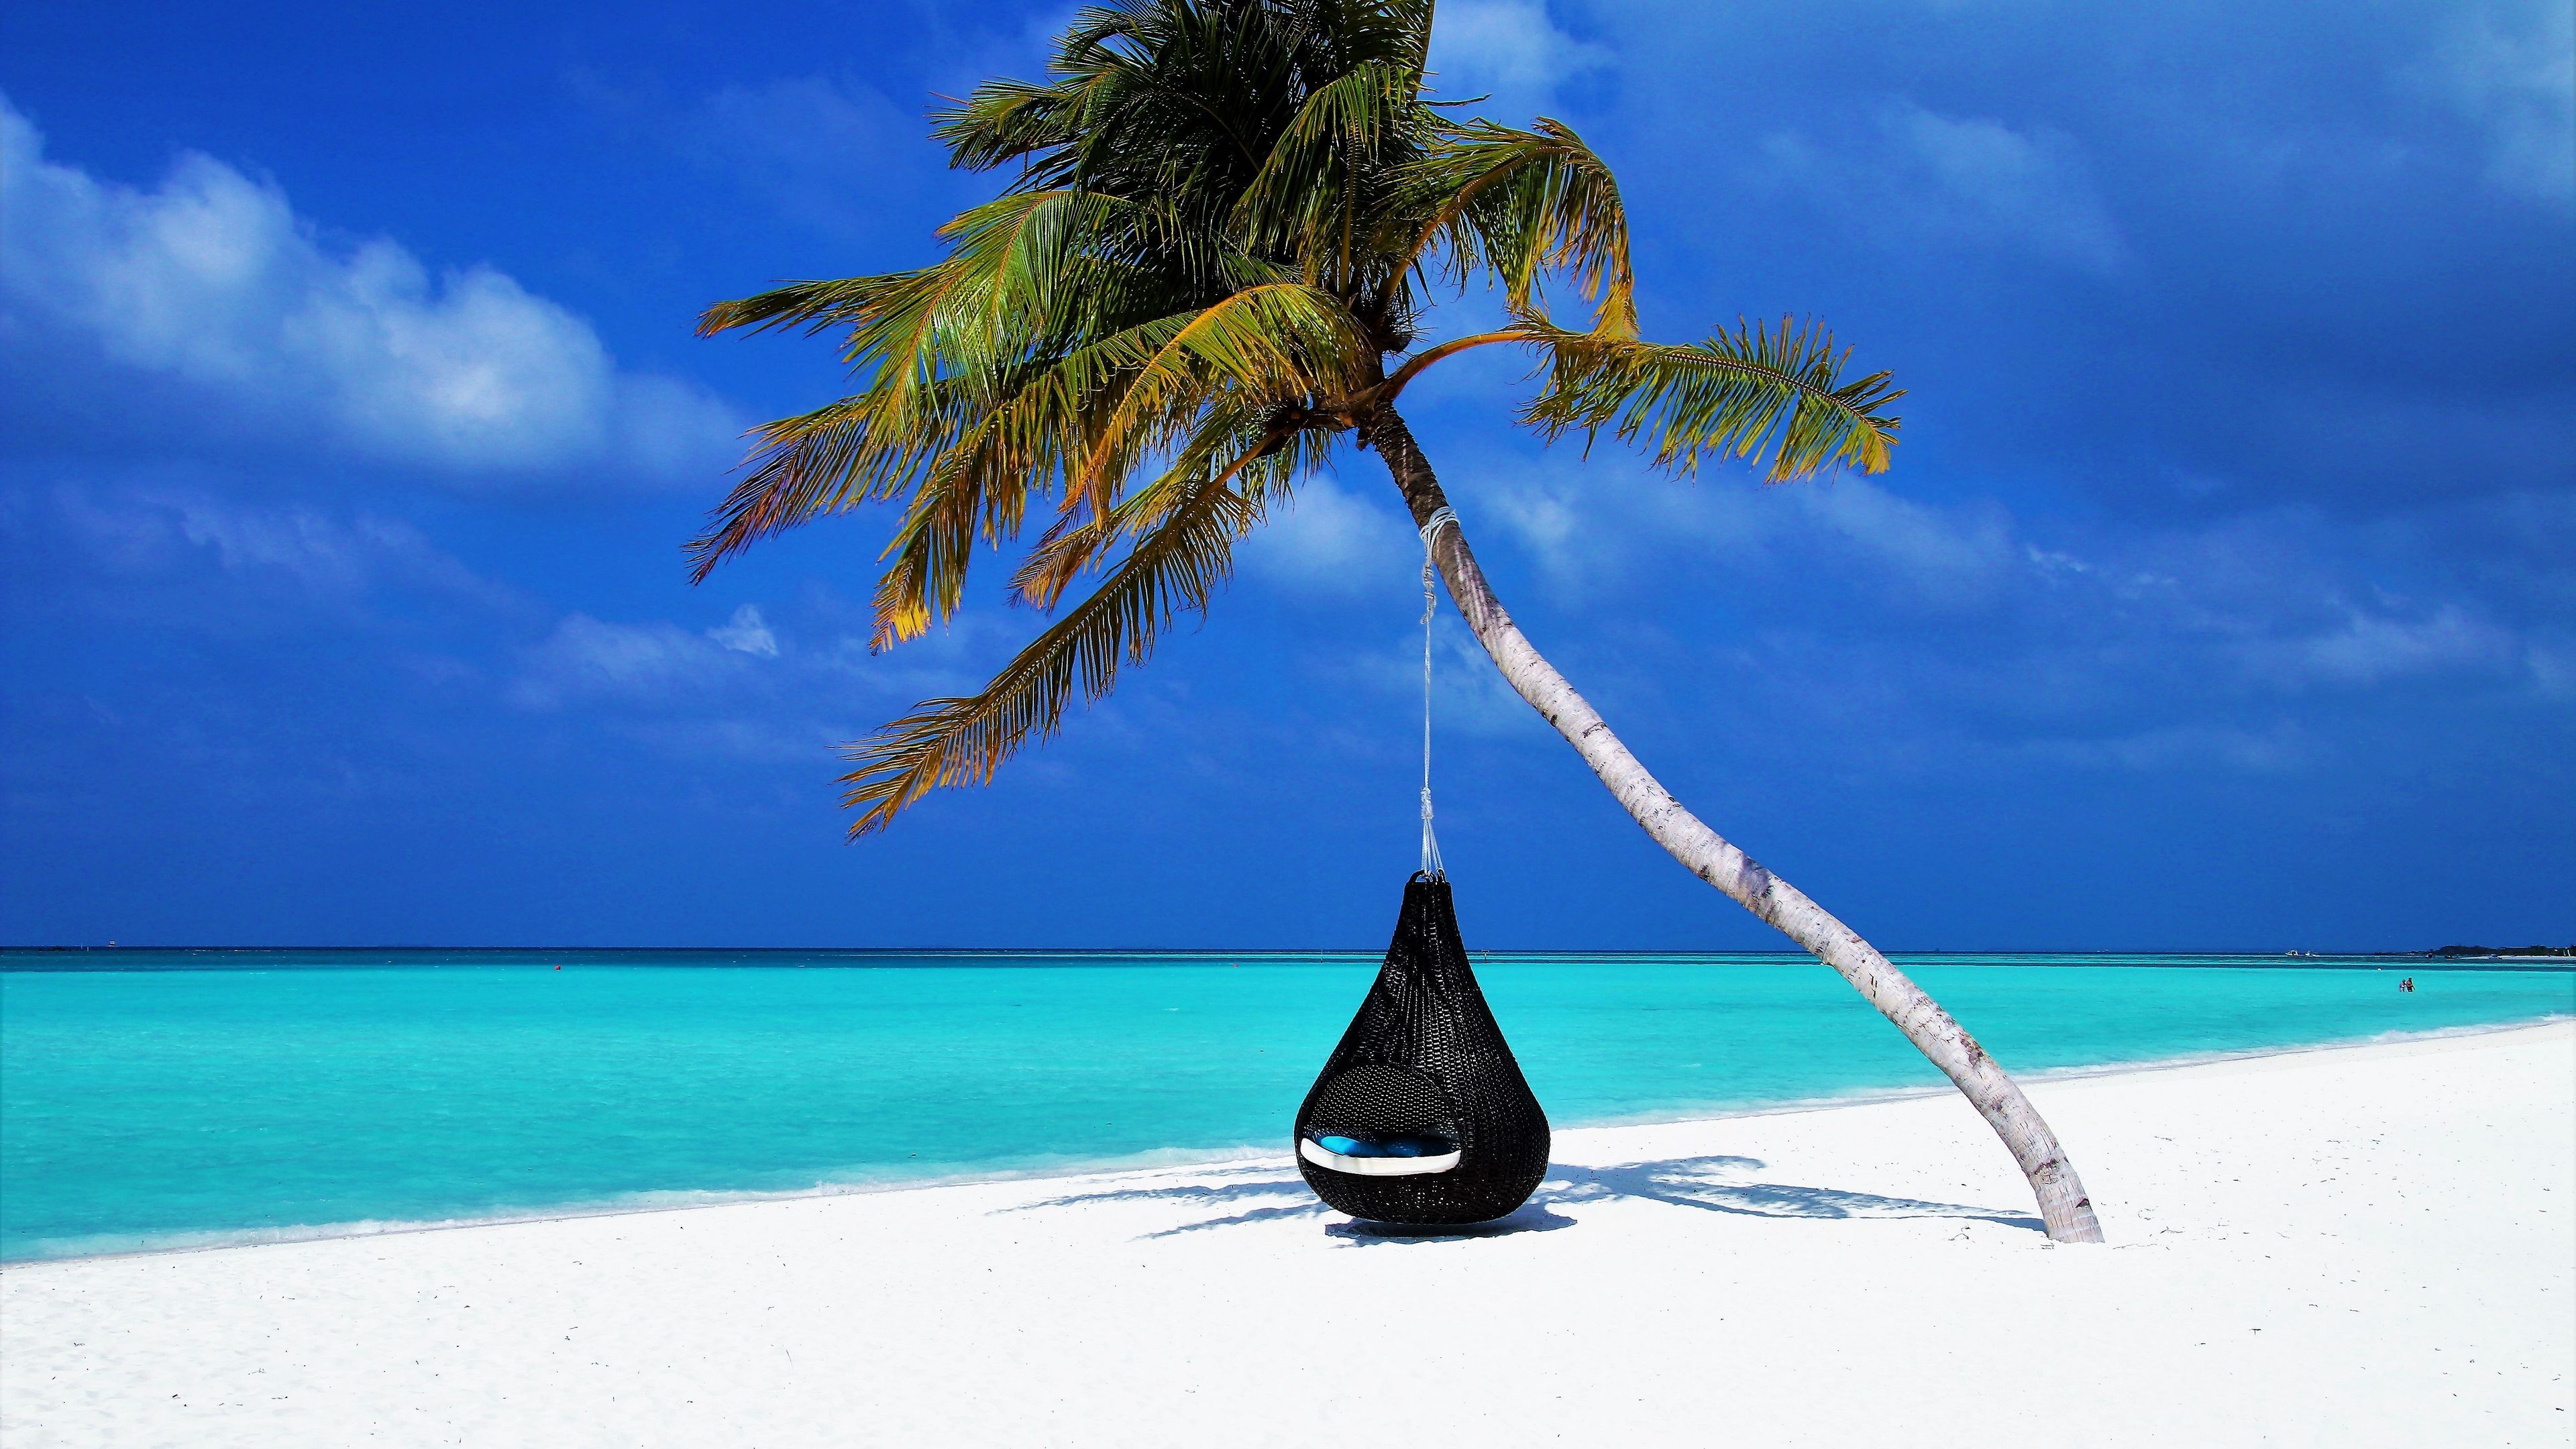 Download wallpaper 3840x2160 maldives, palm, beach, relax, rest, ocean, sand, resort 4k uhd 16:9 HD background